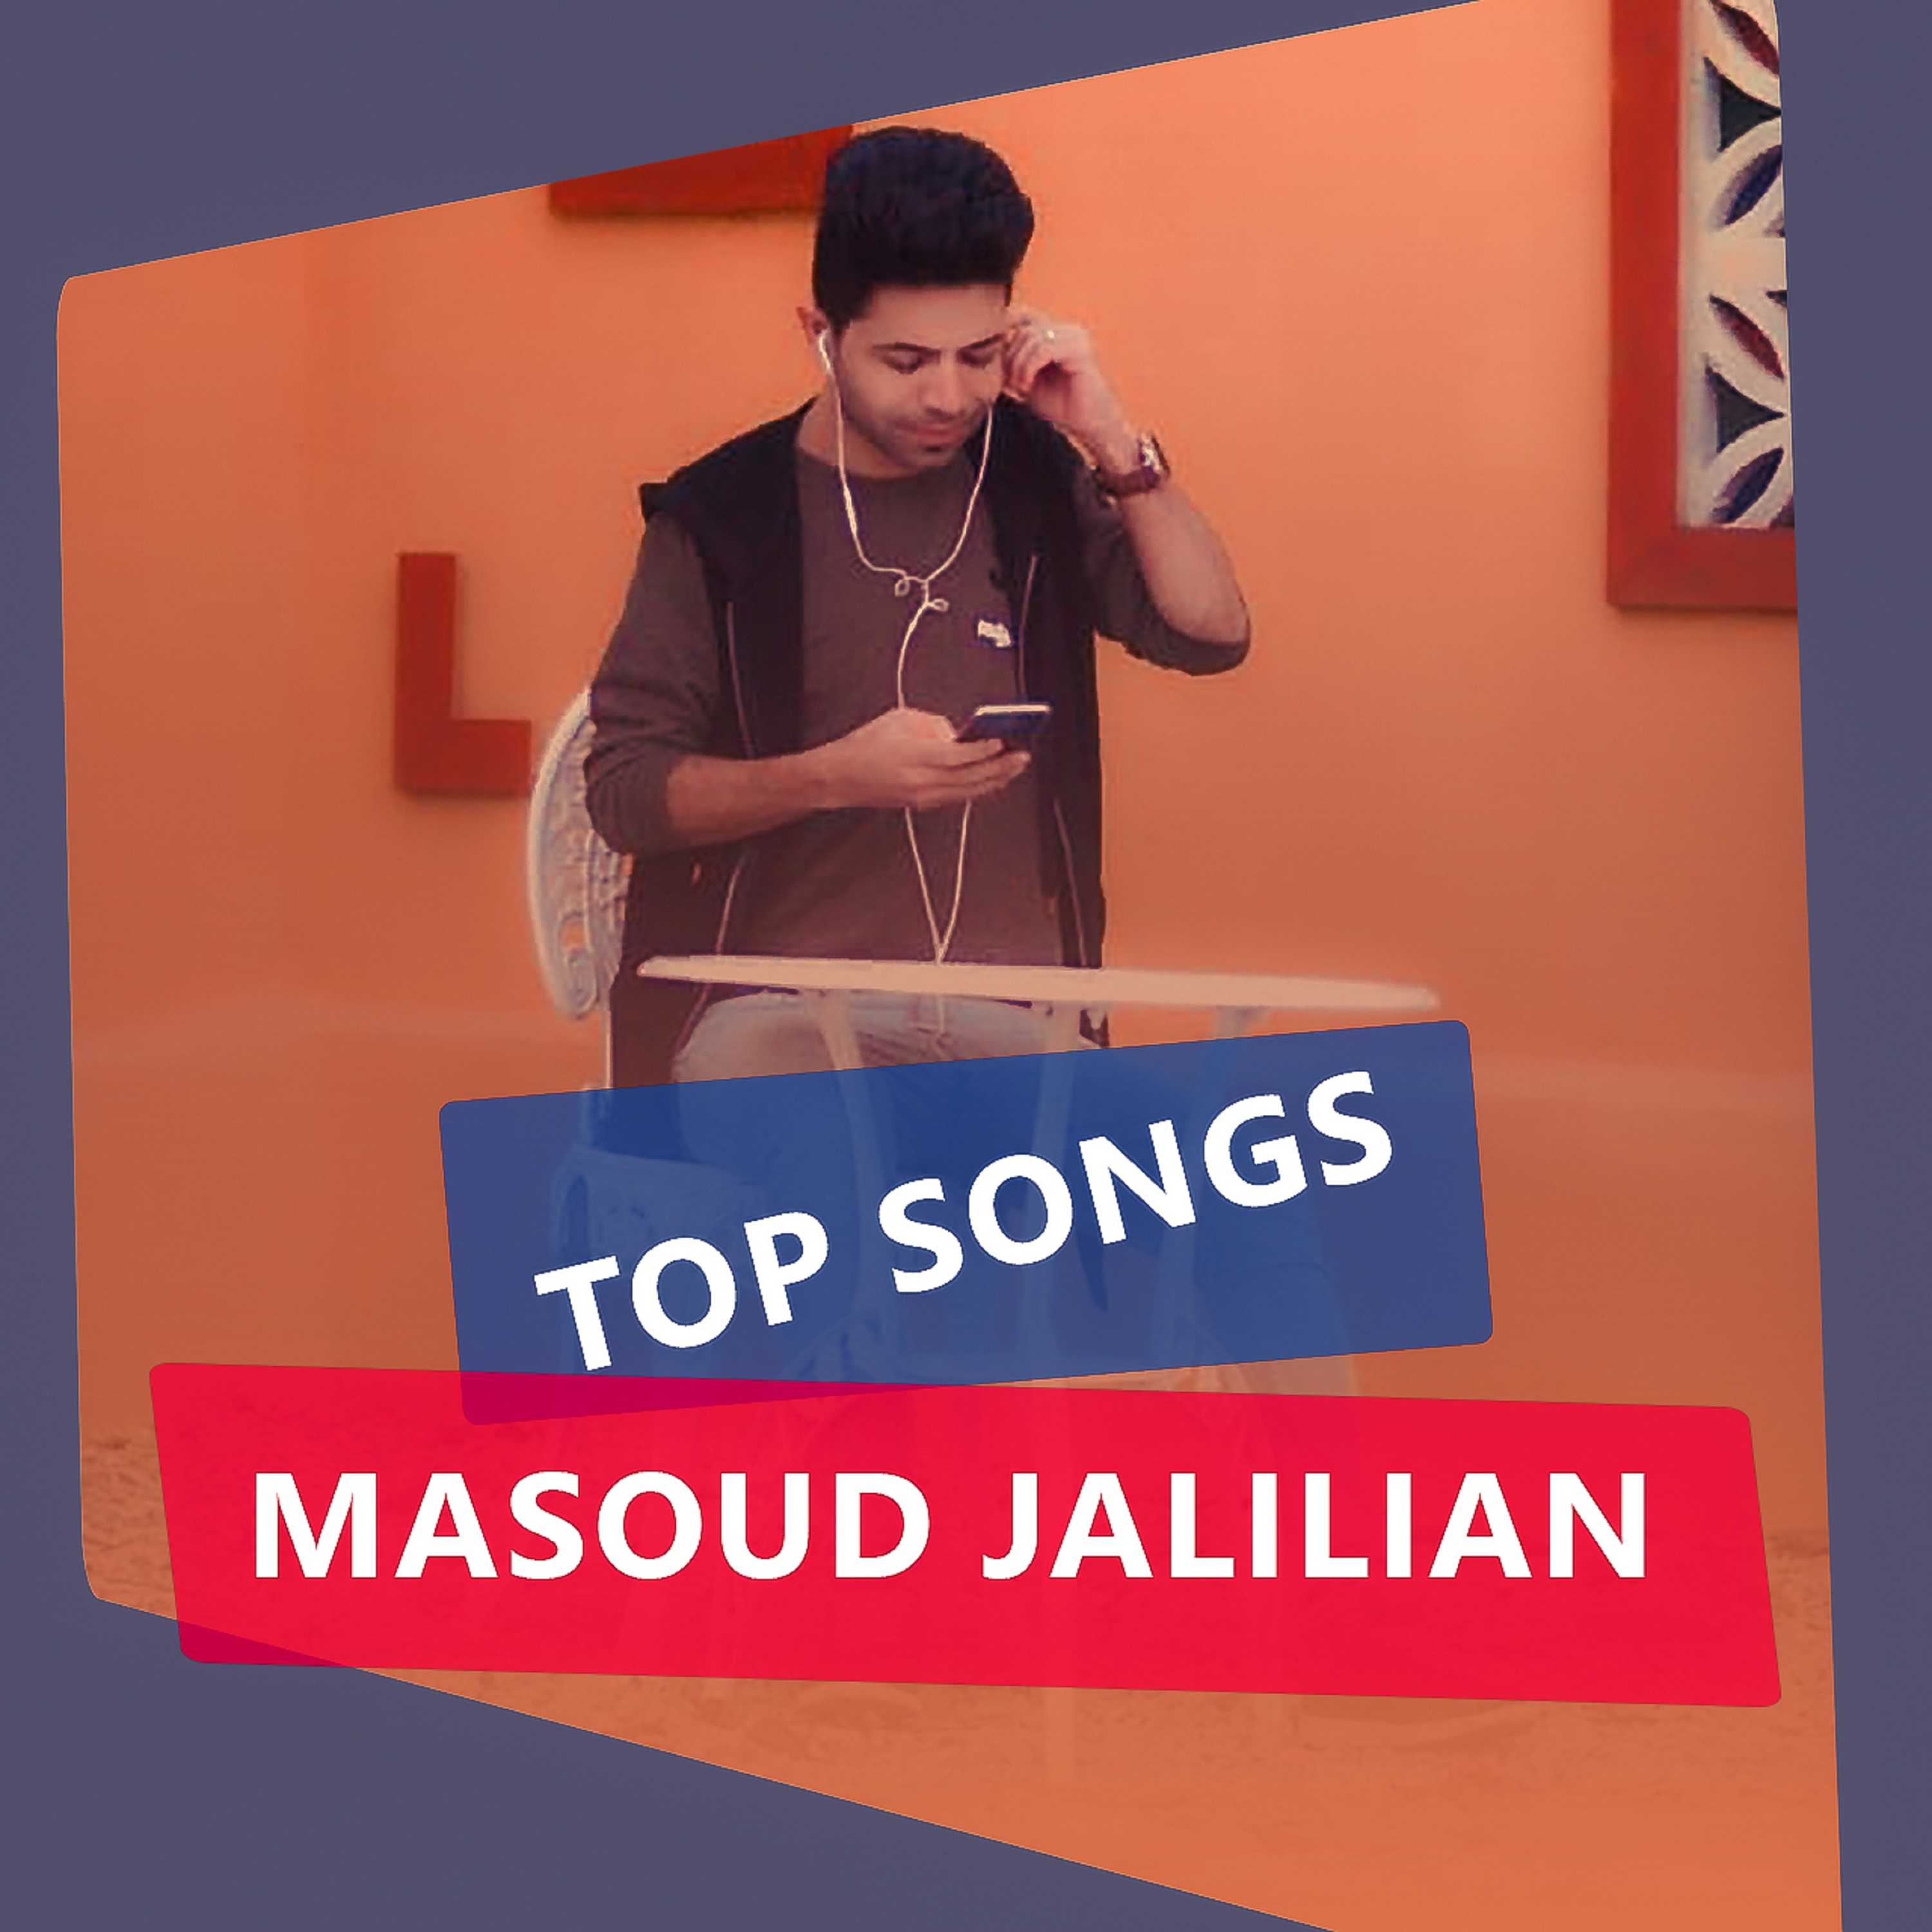  دانلود آهنگ جدید مسعود جلیلیان - دلتنگ | Download New Music By Masoud Jalilian - Deltang (feat. Ehsan Azadi)